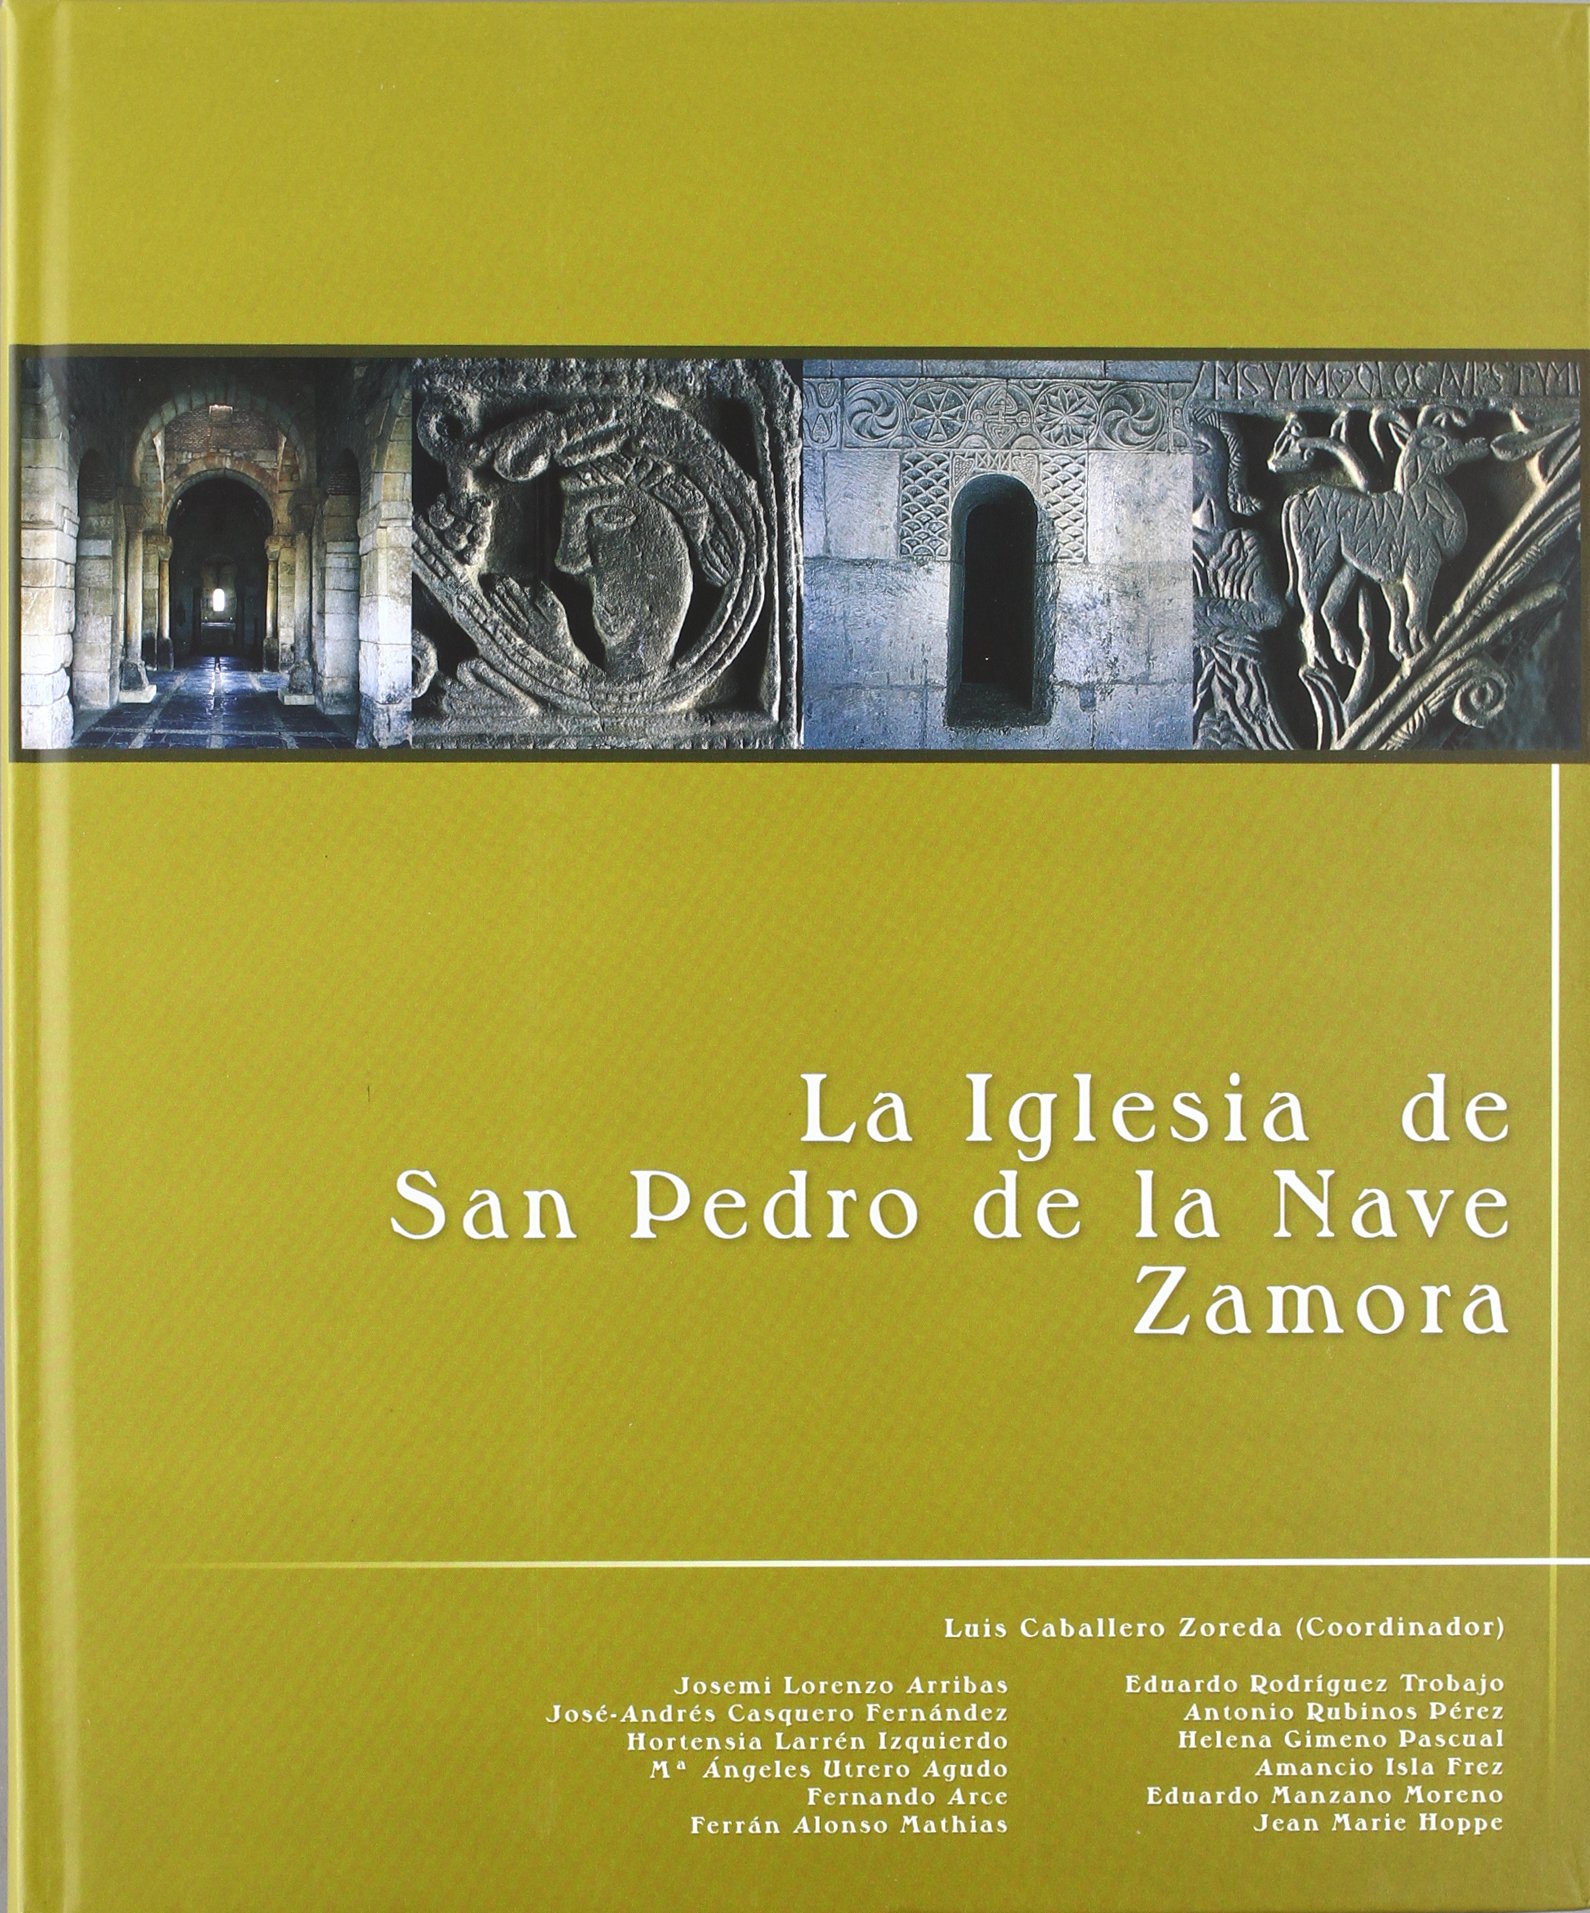 Imagen de portada del libro La Iglesia de San Pedro de la Nave (Zamora)